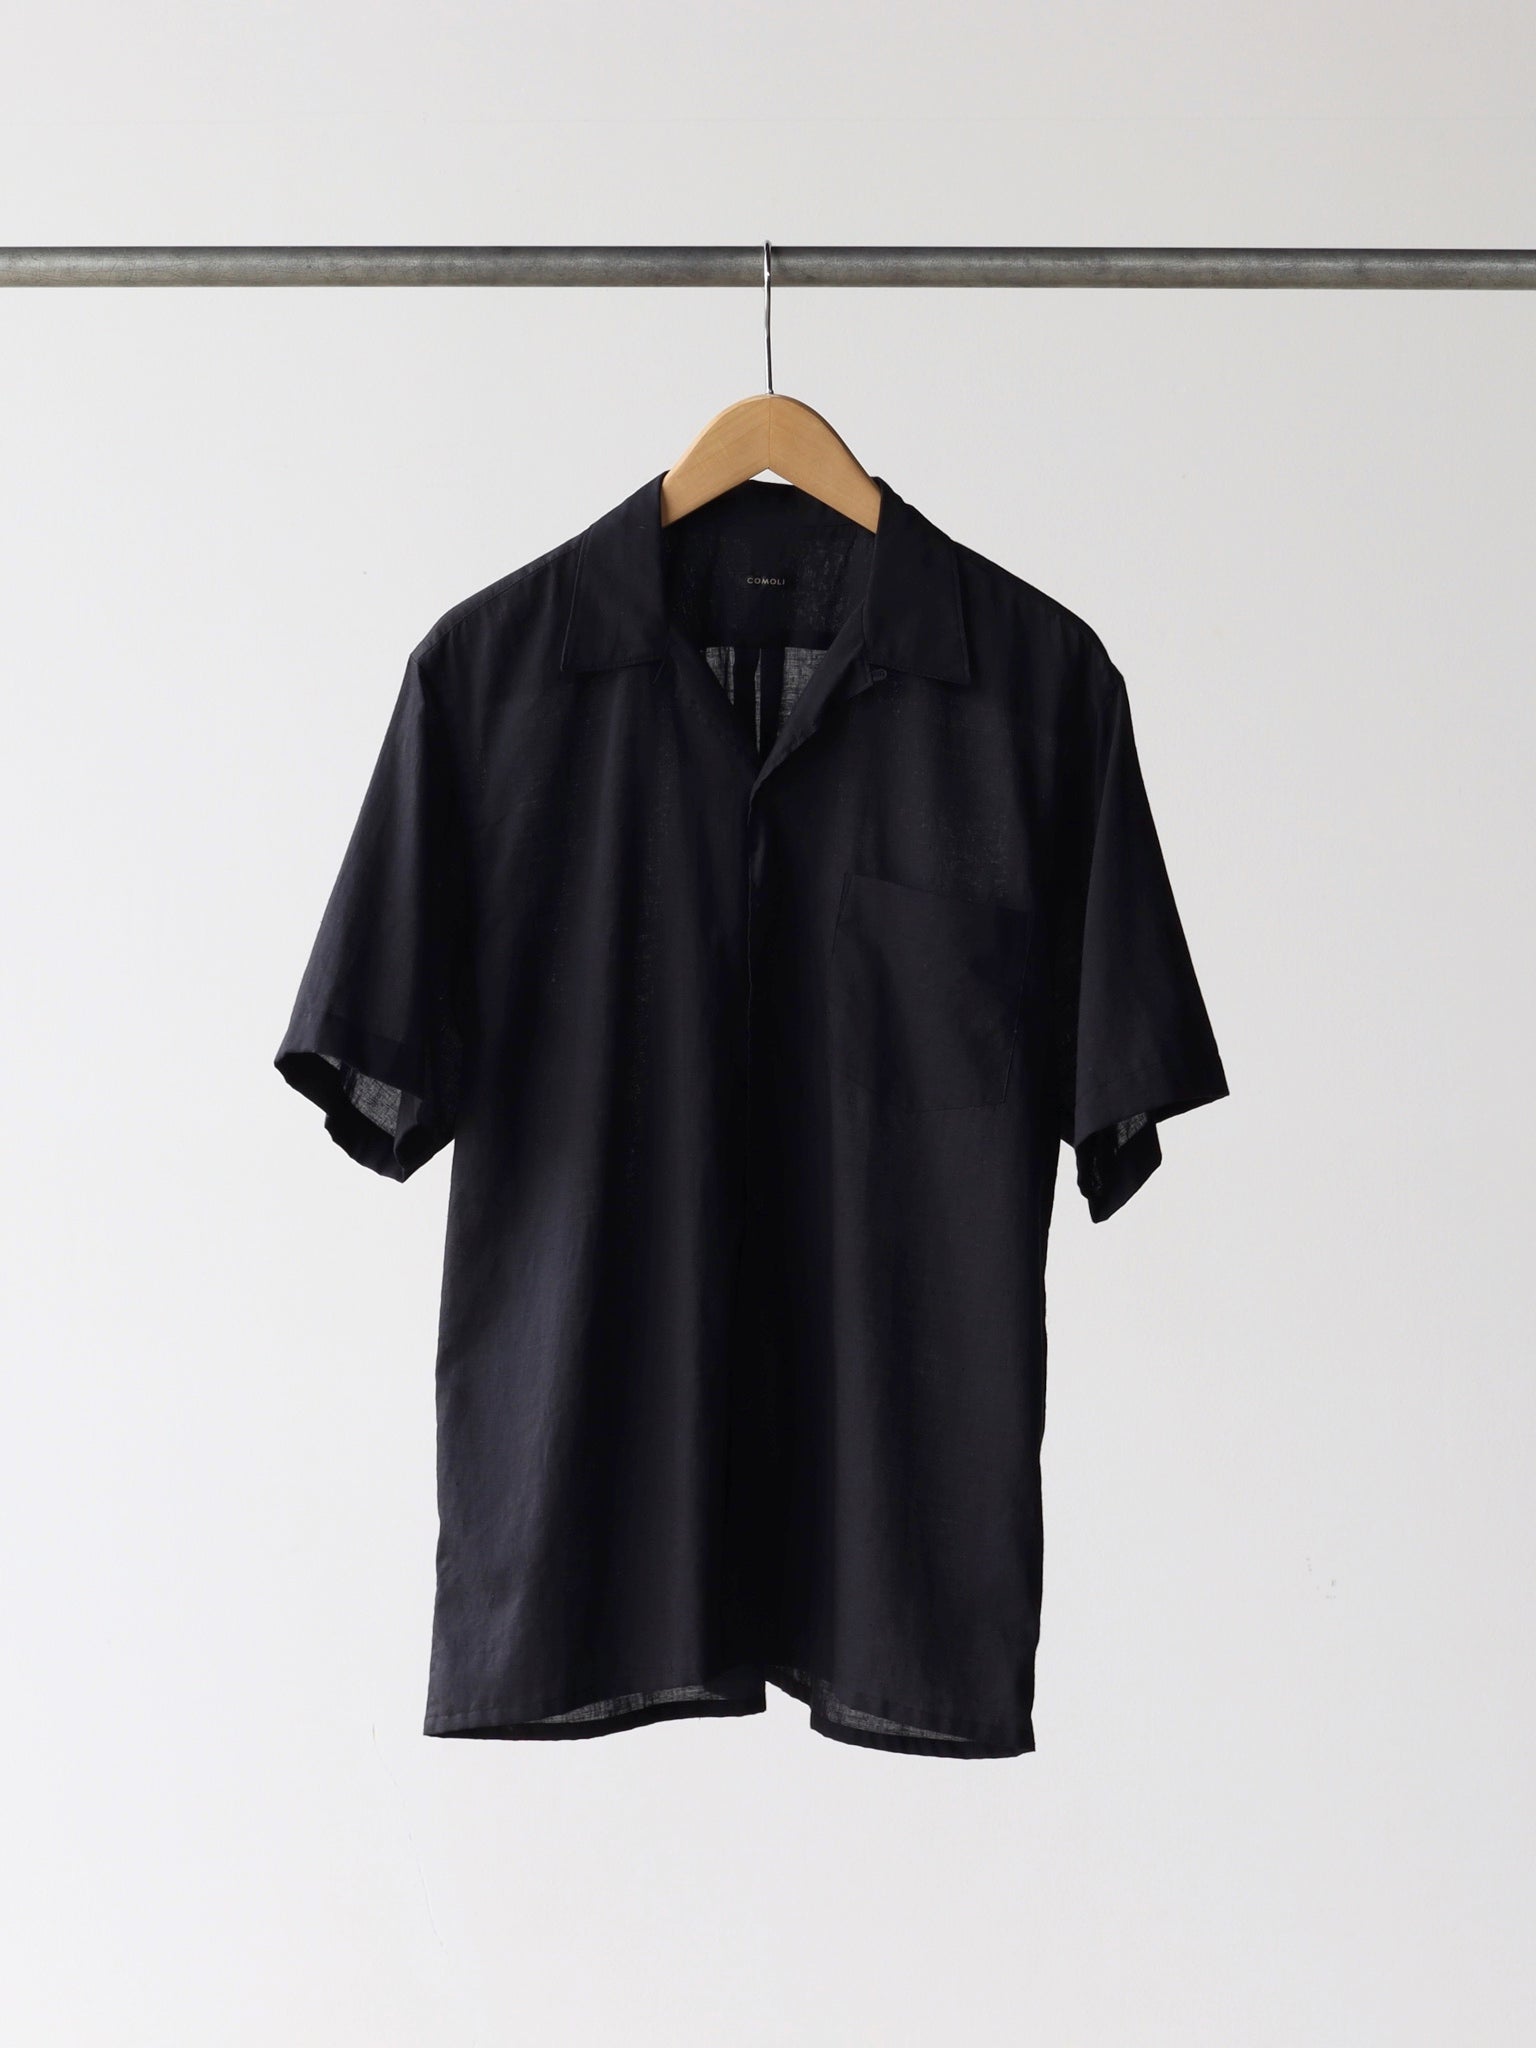 COMOLI KHADIコットン半袖 オープンカラーシャツ BLACK | CASANOVAu0026CO (カサノヴァアンドコー) オンライン通販サイト